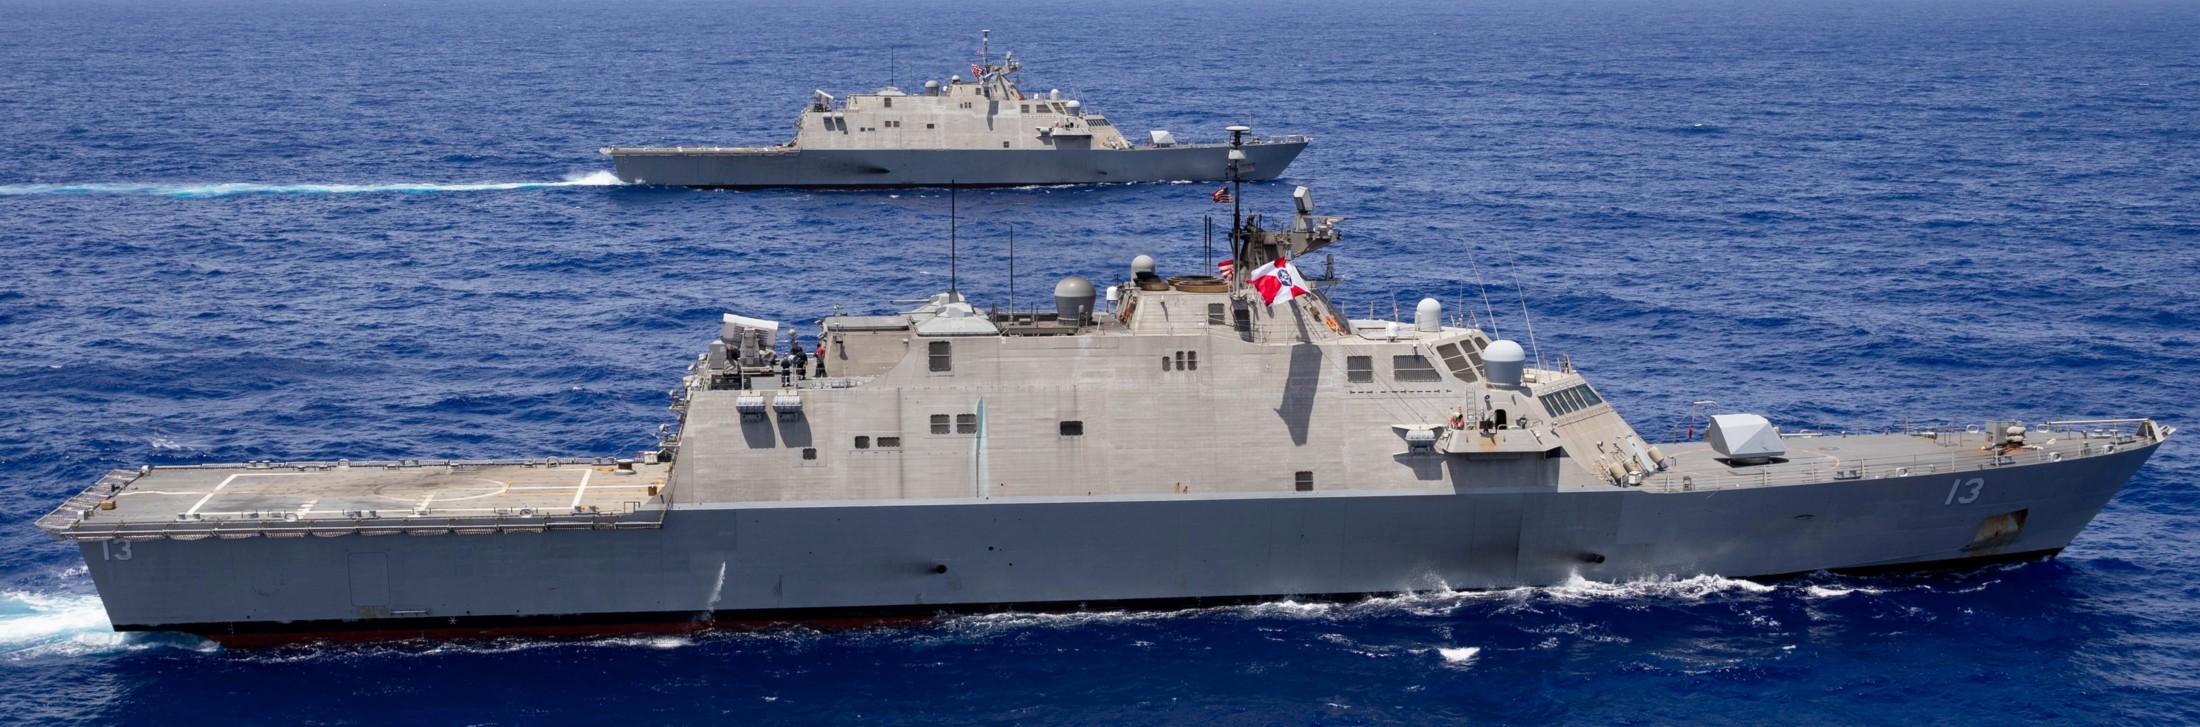 lcs-13 uss wichita freedom class littoral combat ship us navy 35